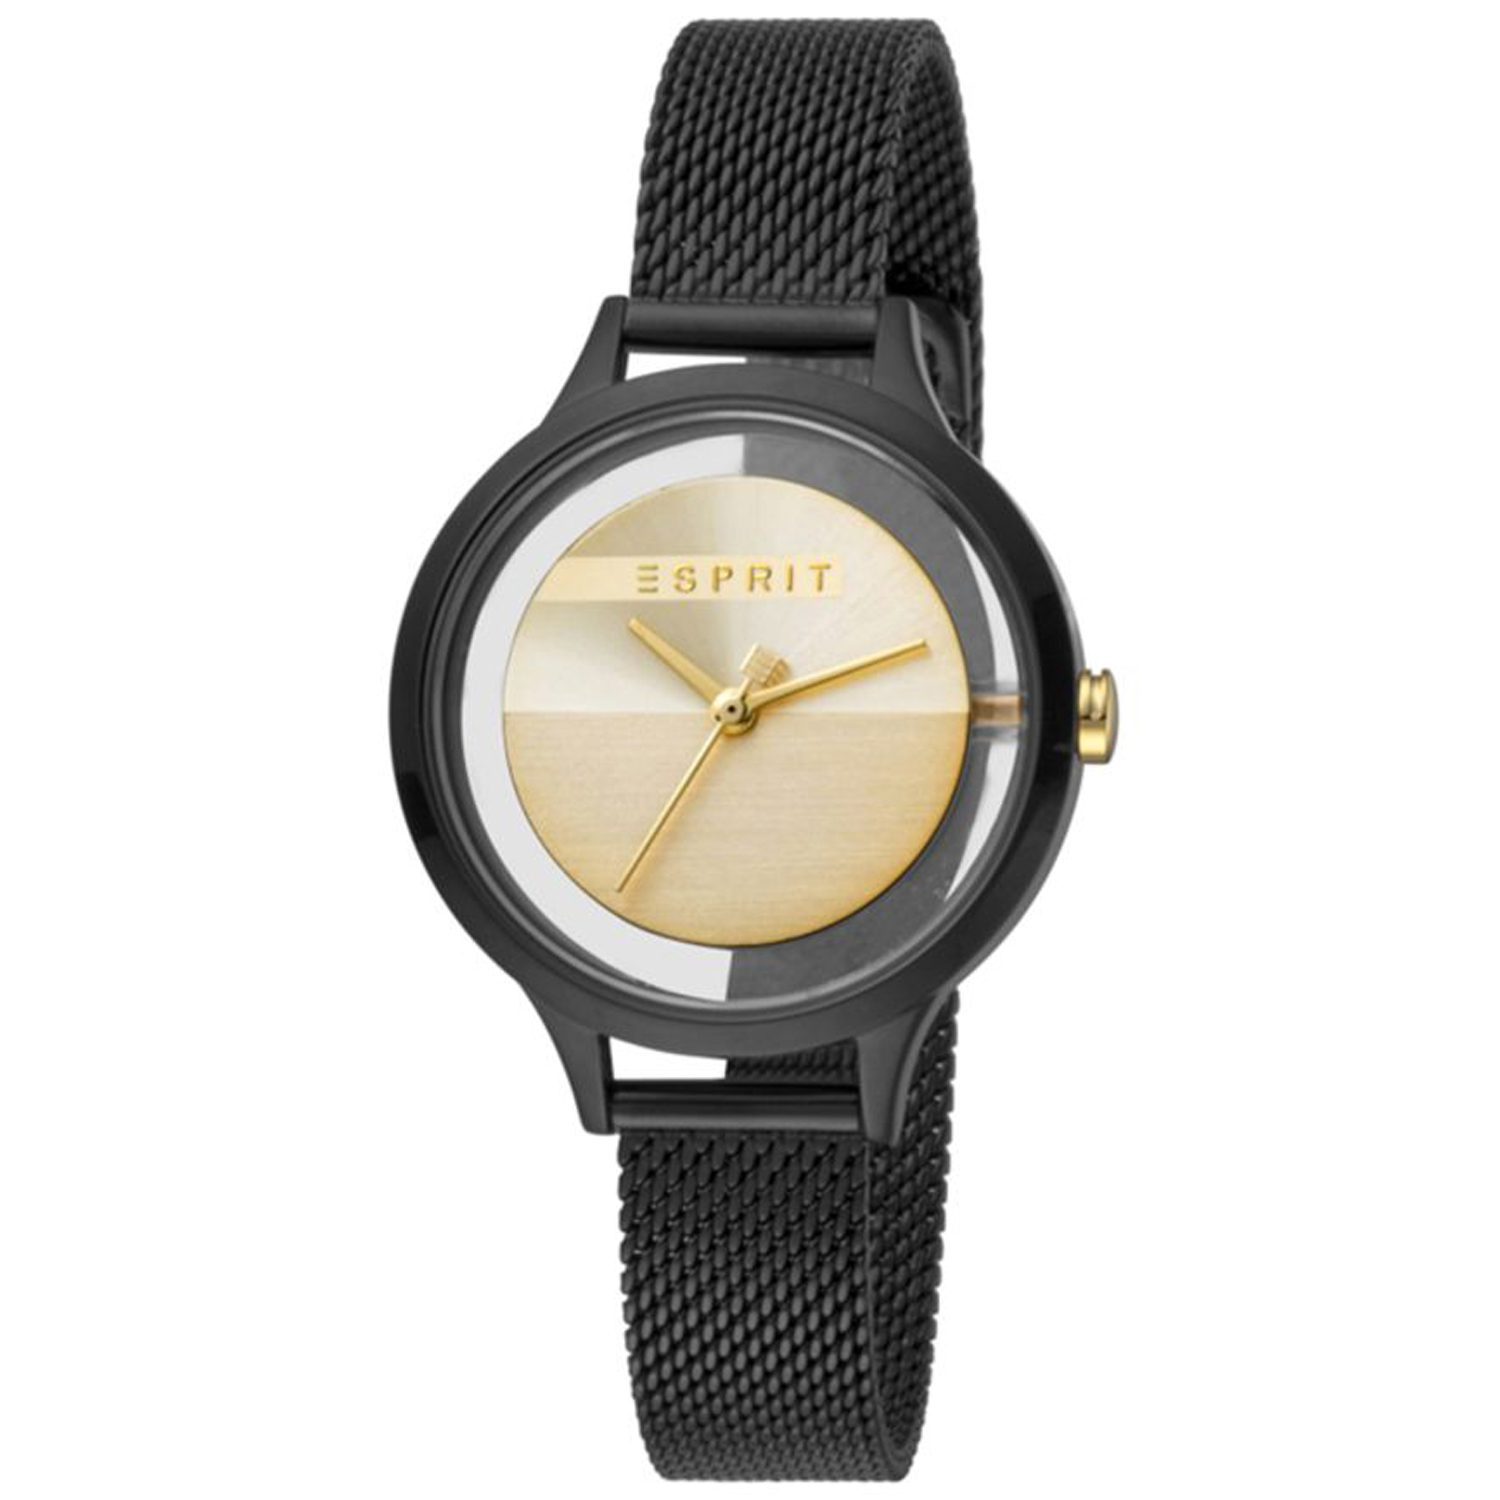 Esprit dames Horloge ES1L088M0045 in ZWART en GOUD kleur - 3ATM - pols stalen horloge